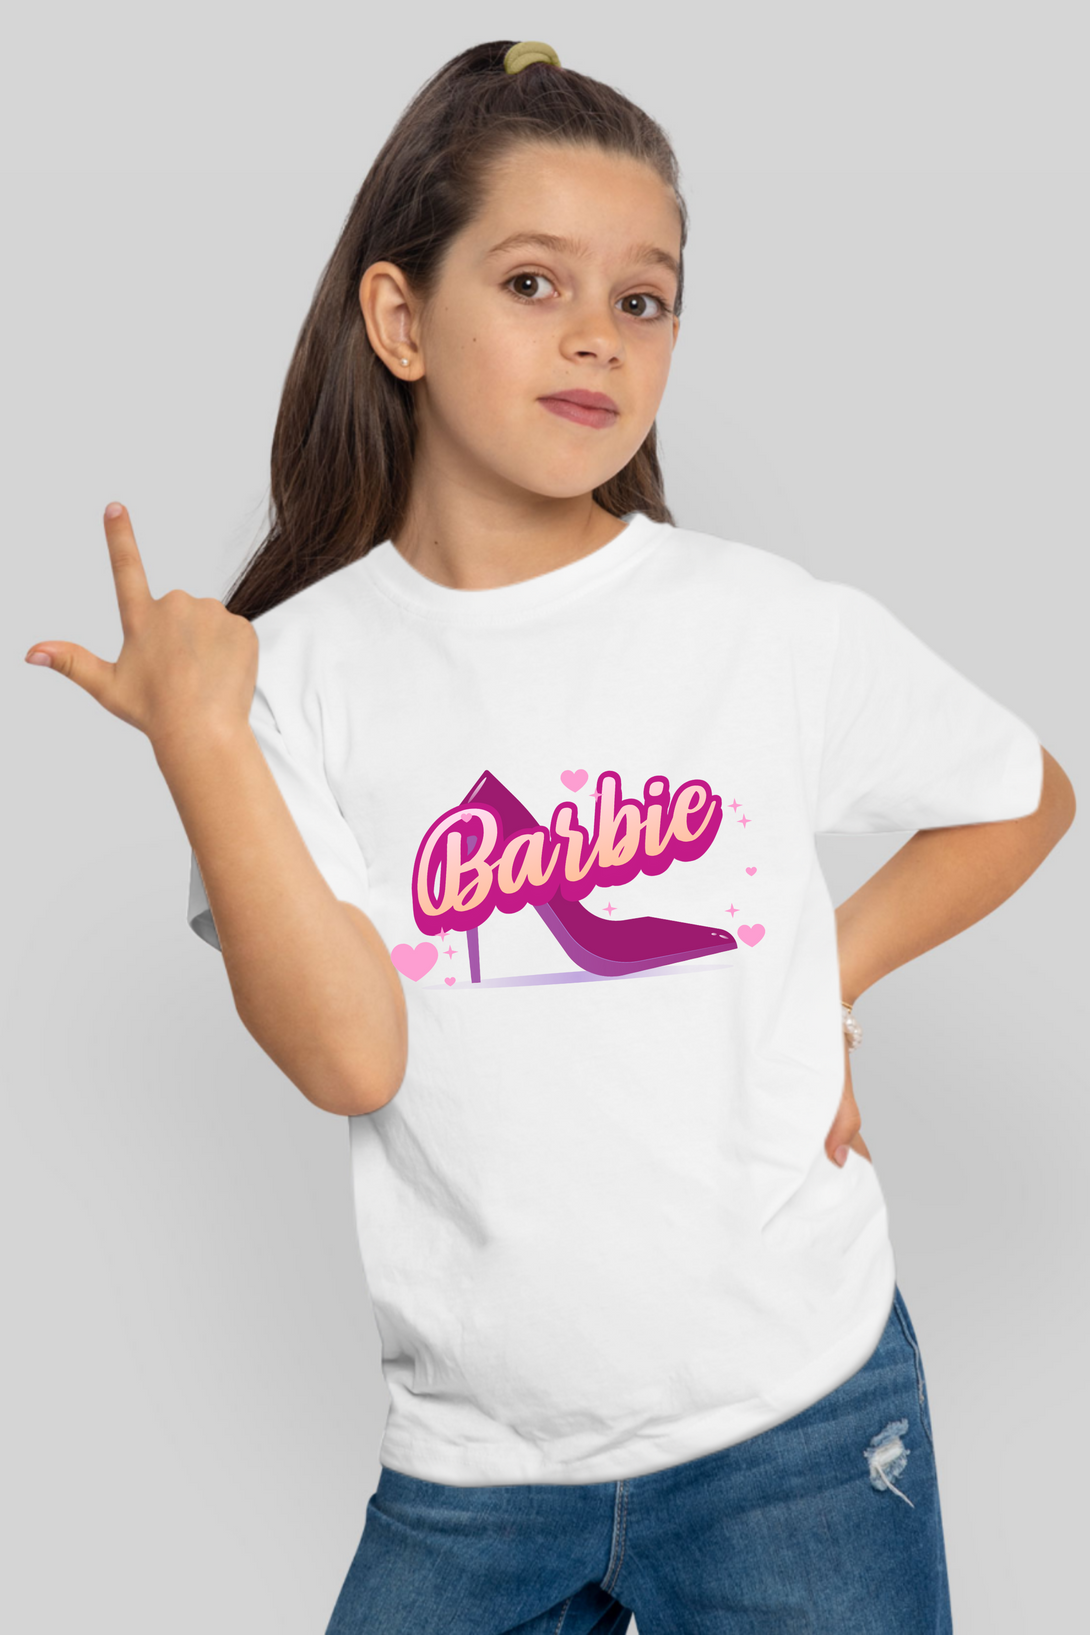 Barbie Printed T-Shirt For Girl - WowWaves - 8